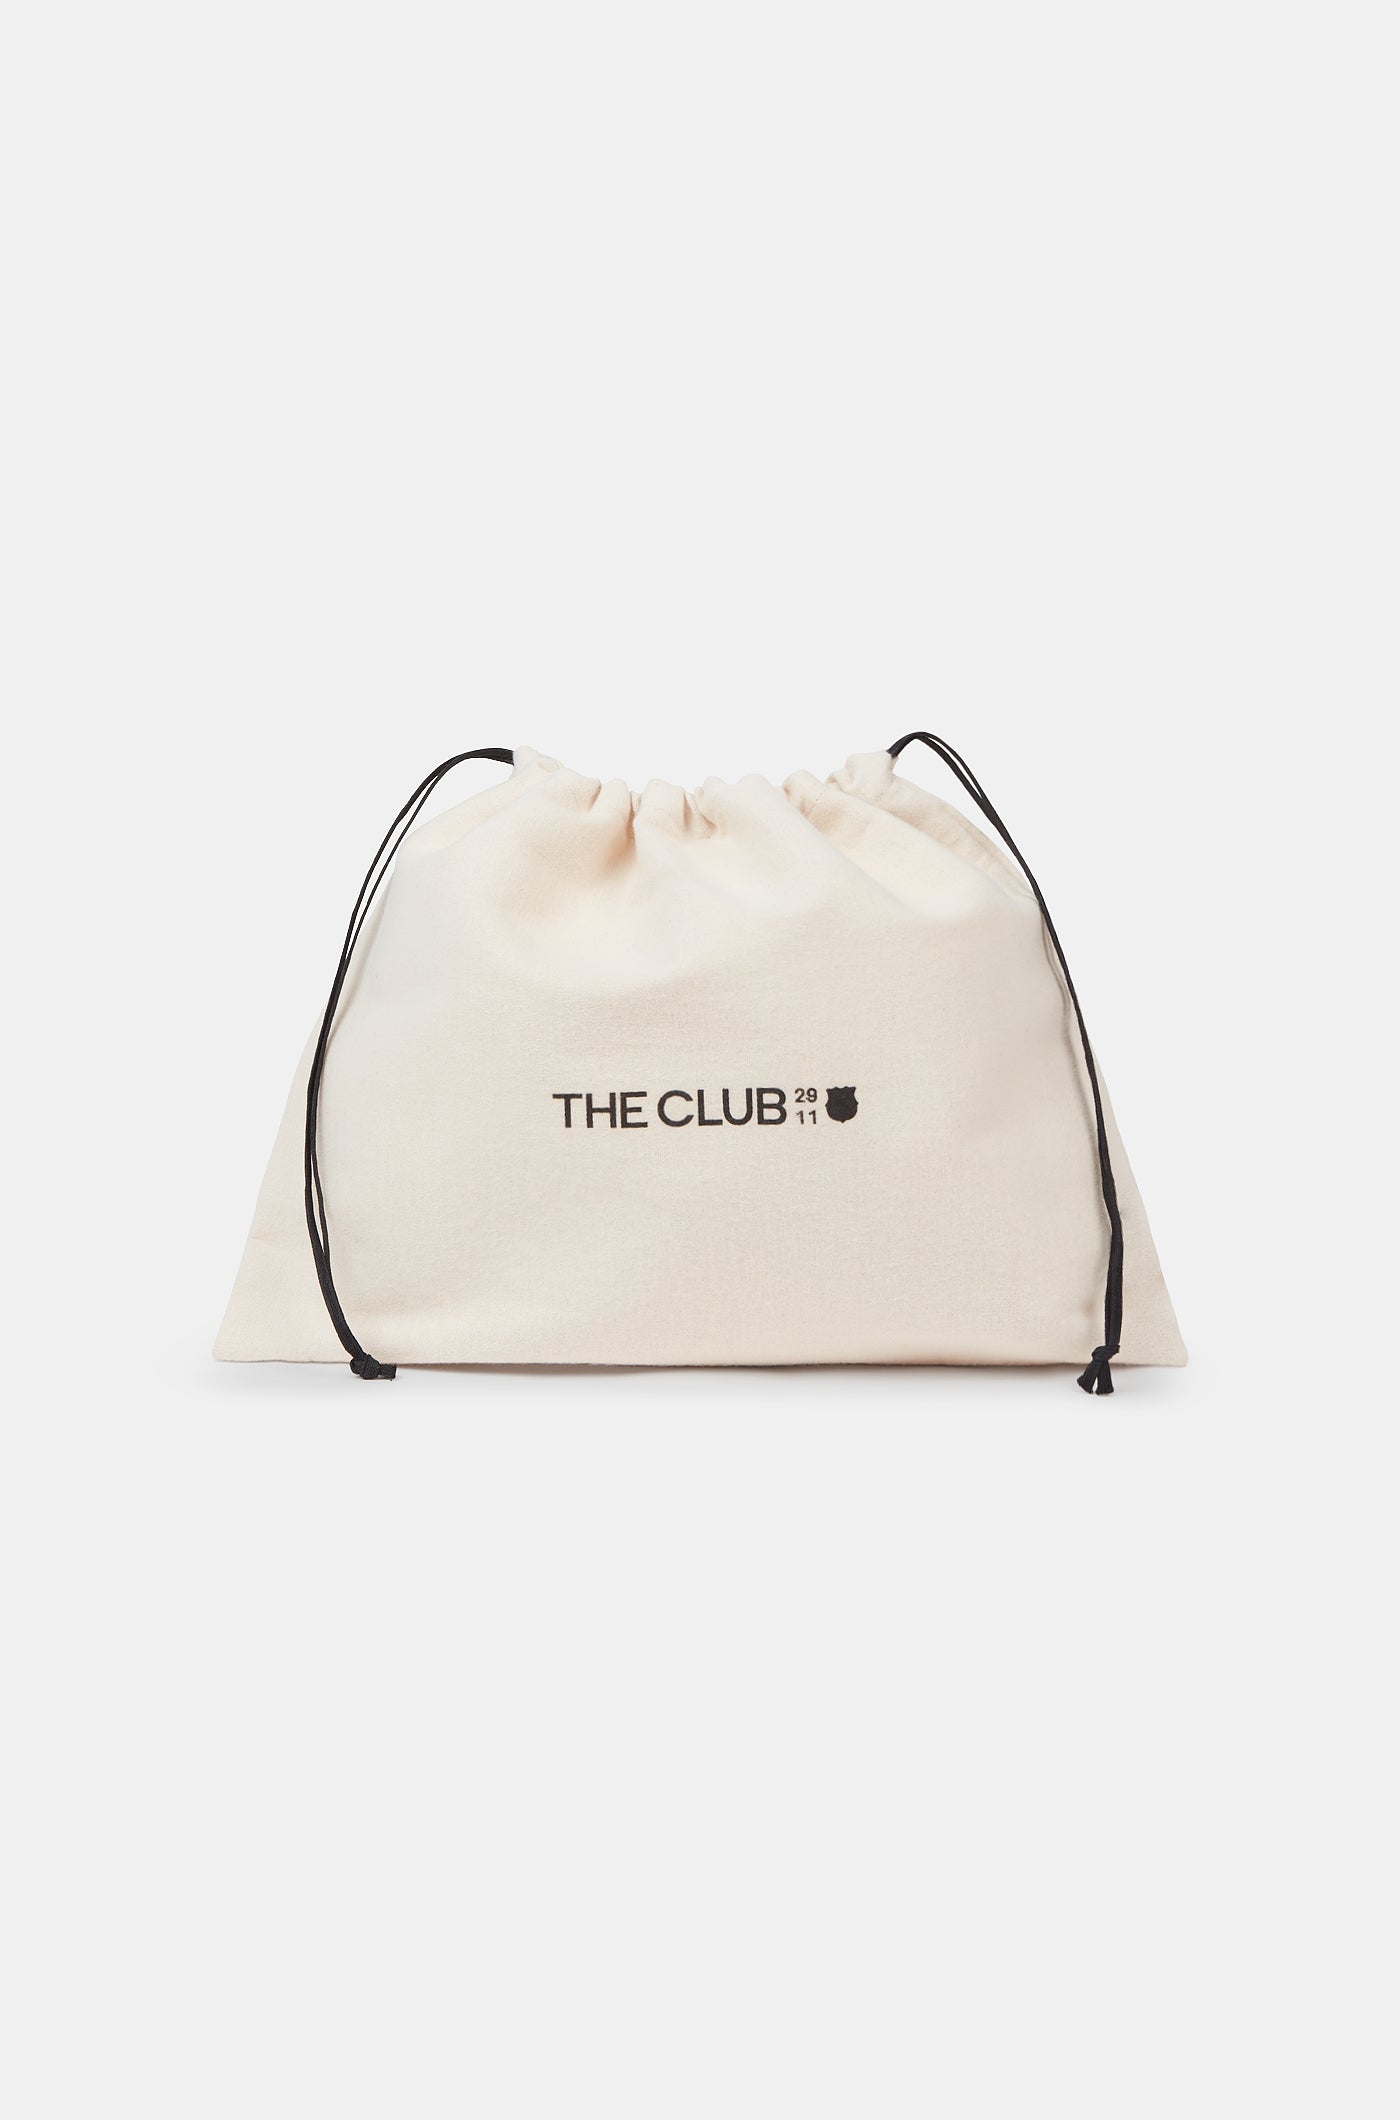 The Club Toiletry Bag